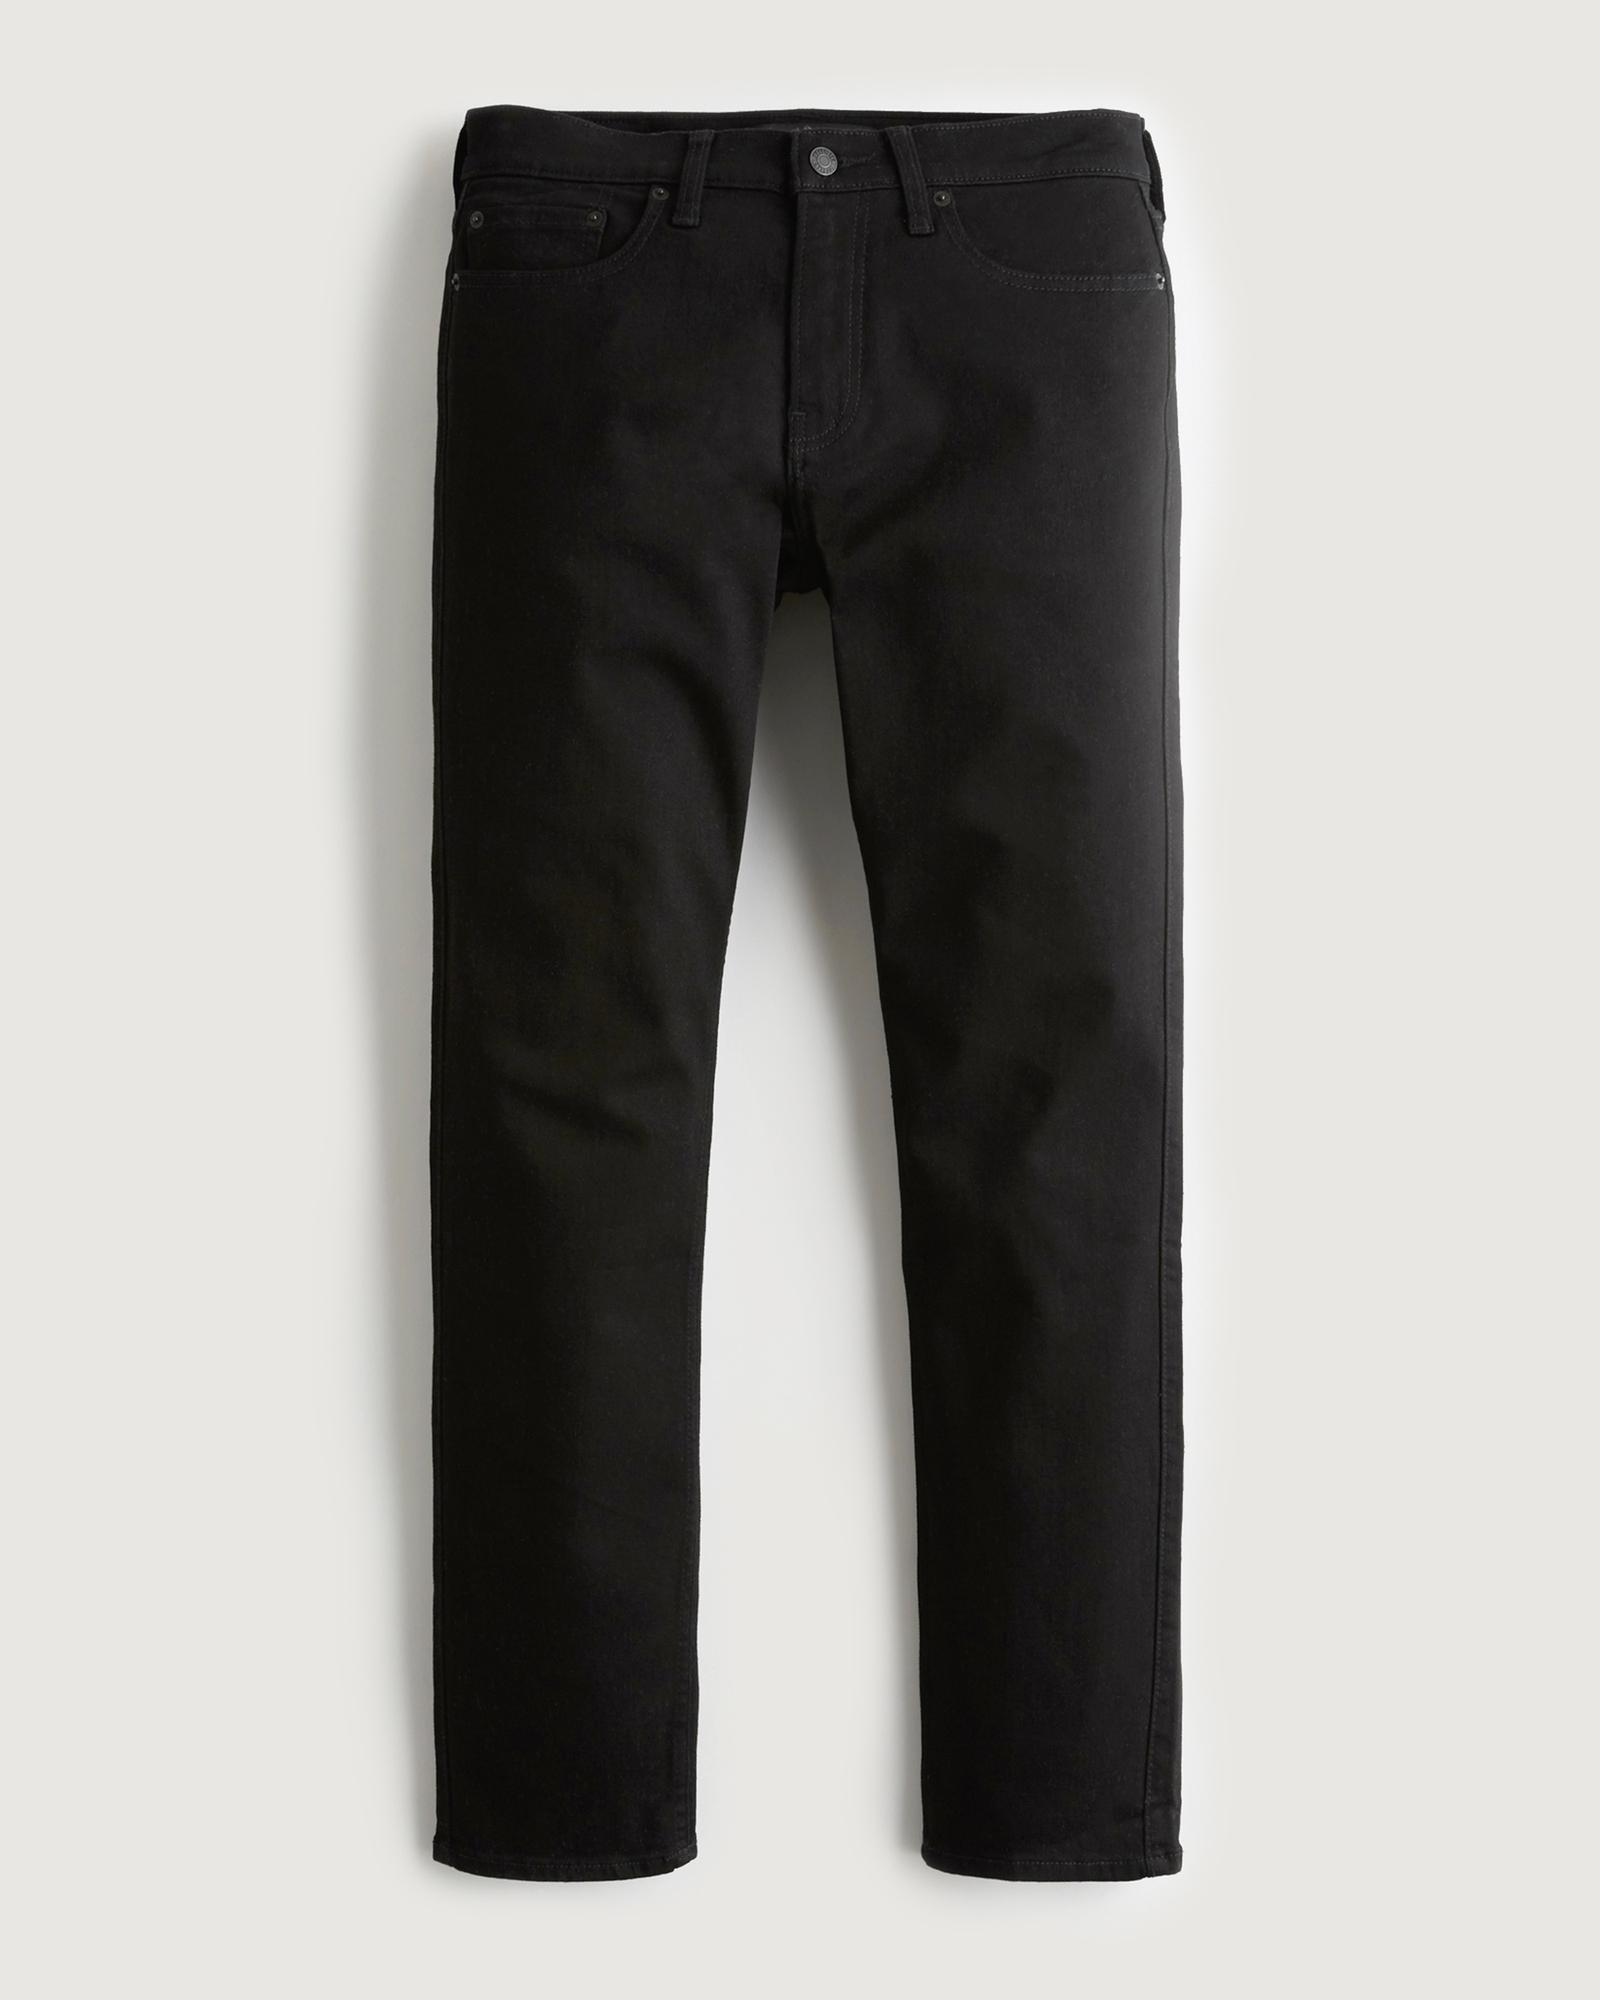 Plain Men Hollister Denim Straight Fit Jeans, Grey at Rs 440/piece